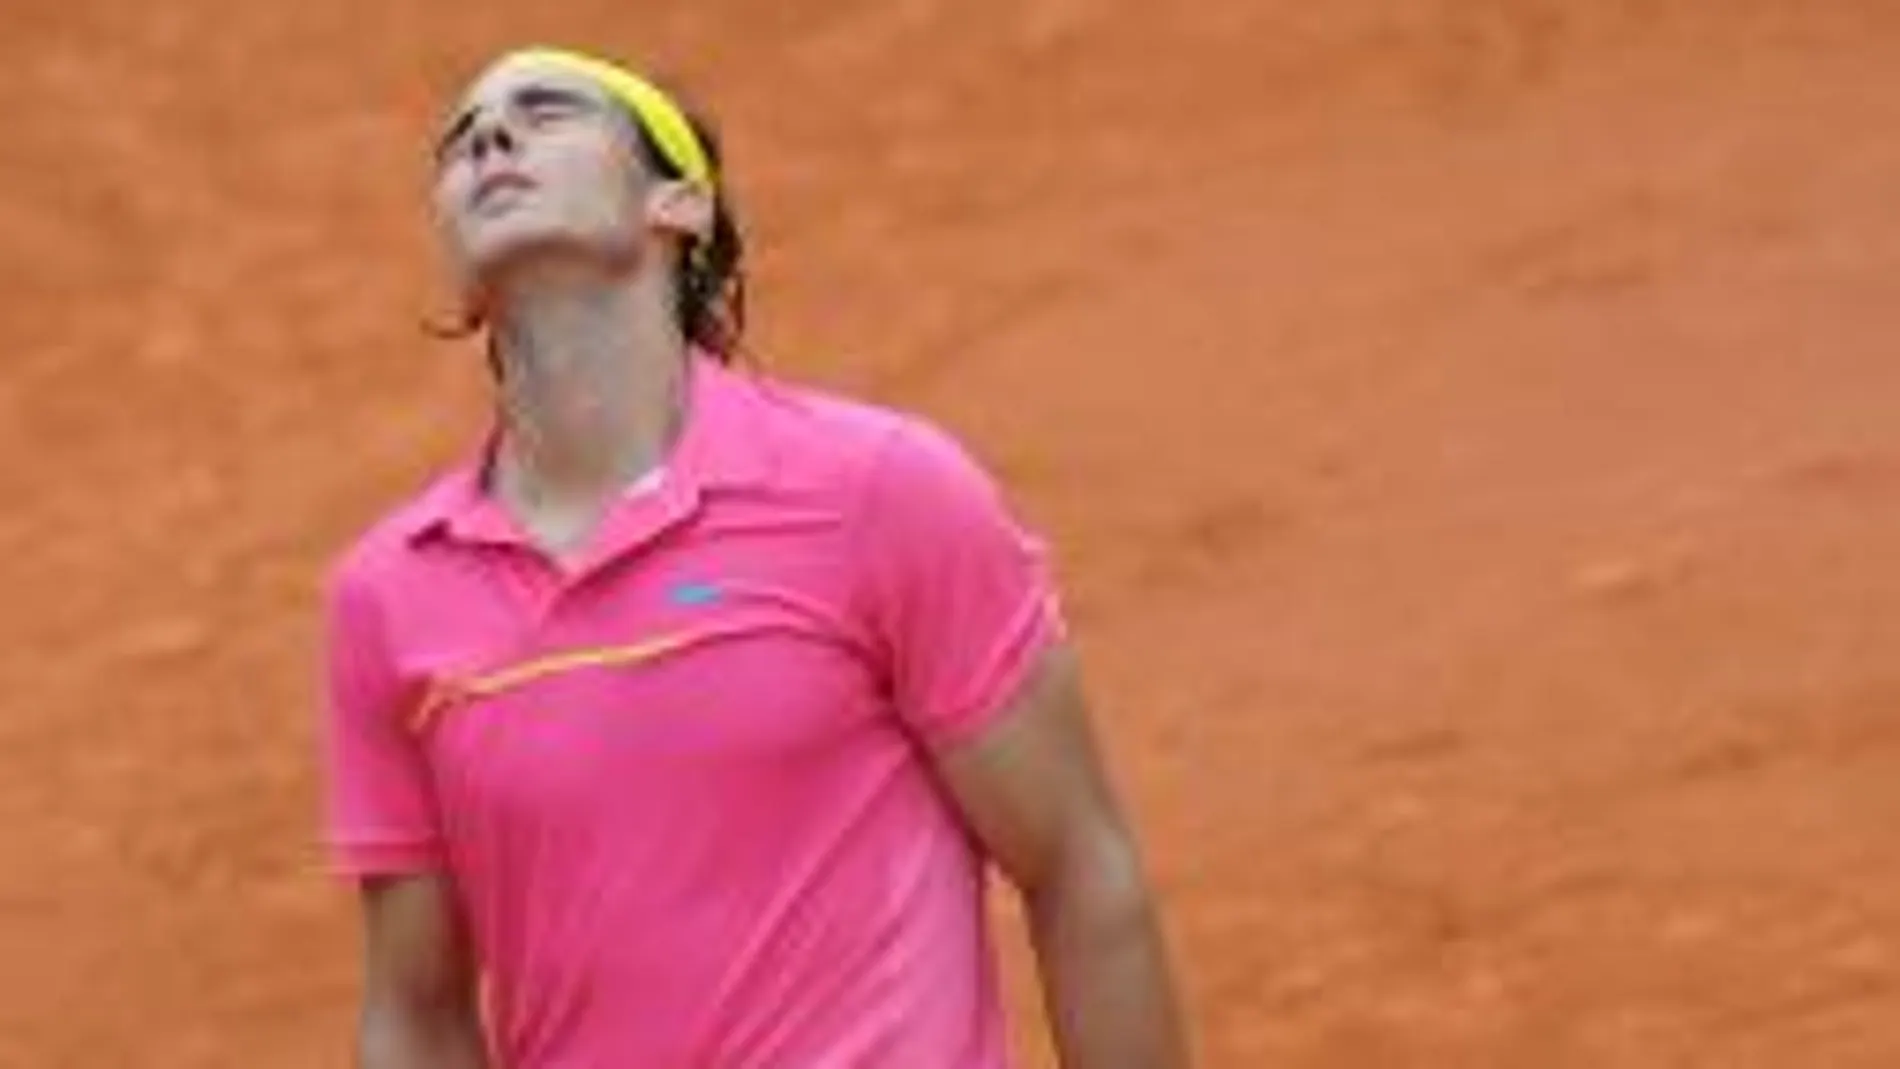 Nadal pierde ante Soderling en Roland Garros 2009